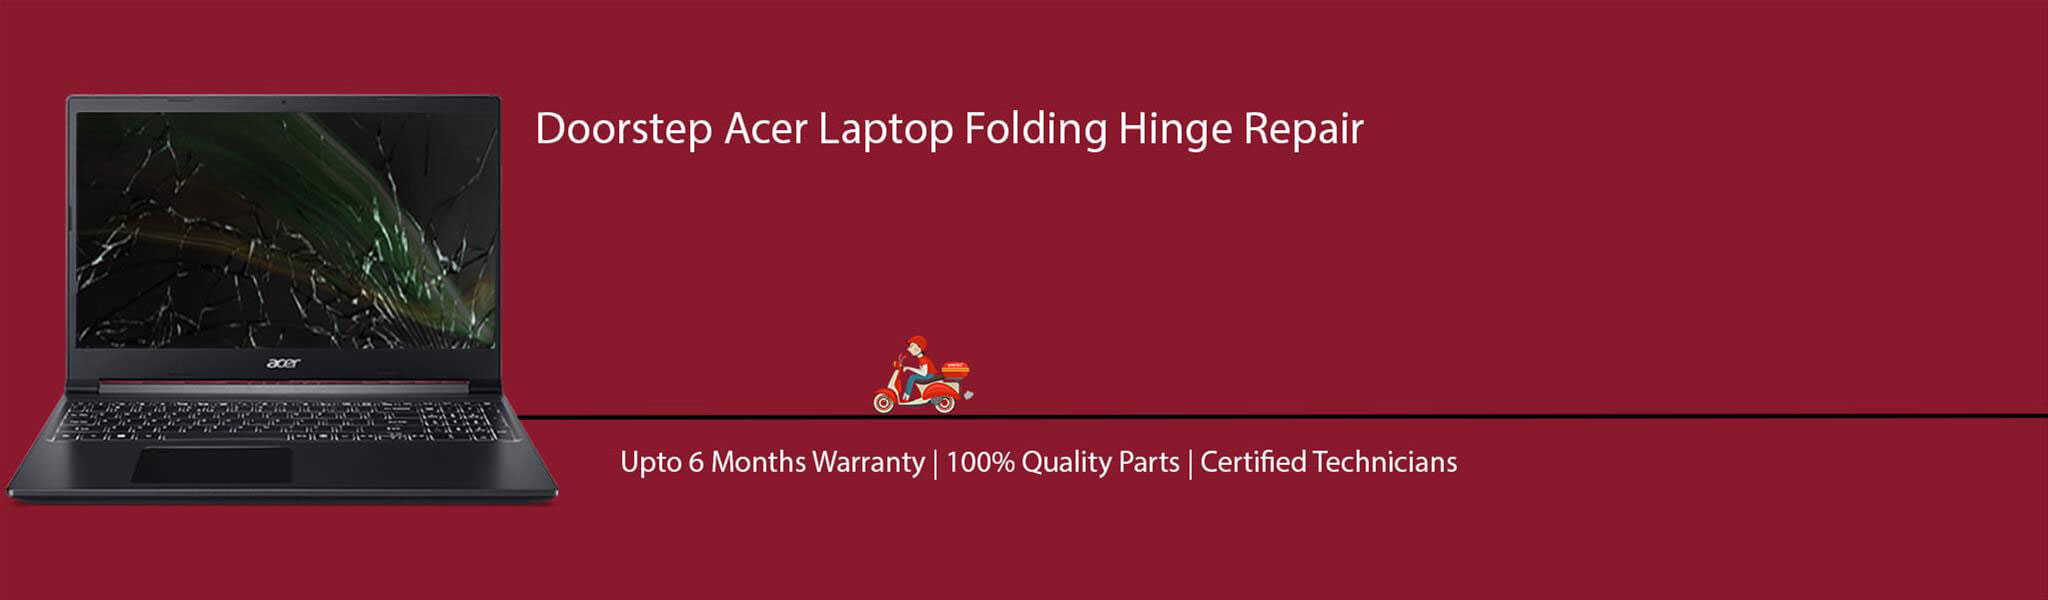 acer-laptop-folding-hinge-repair.jpg